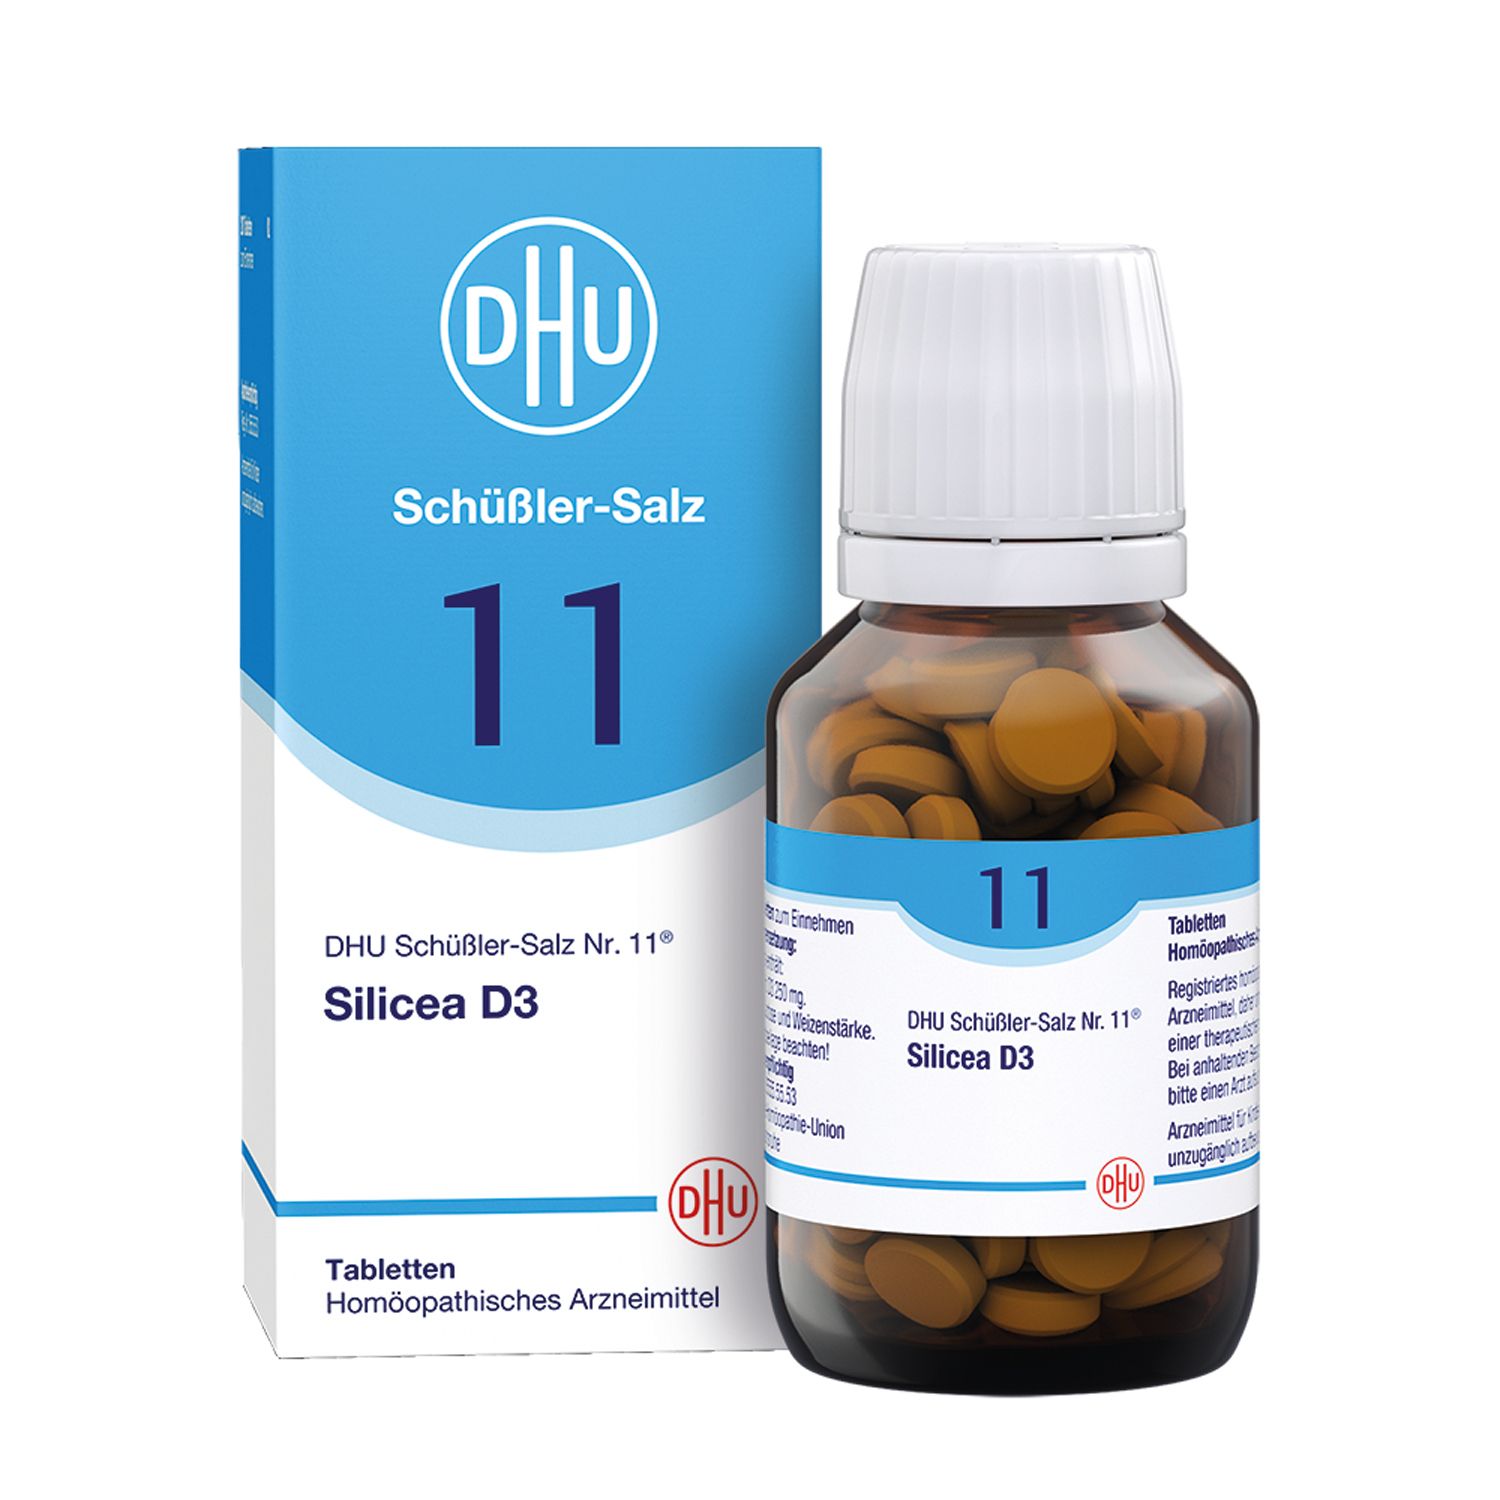 DHU Schüßler-Salz Nr. 11® Silicea D3